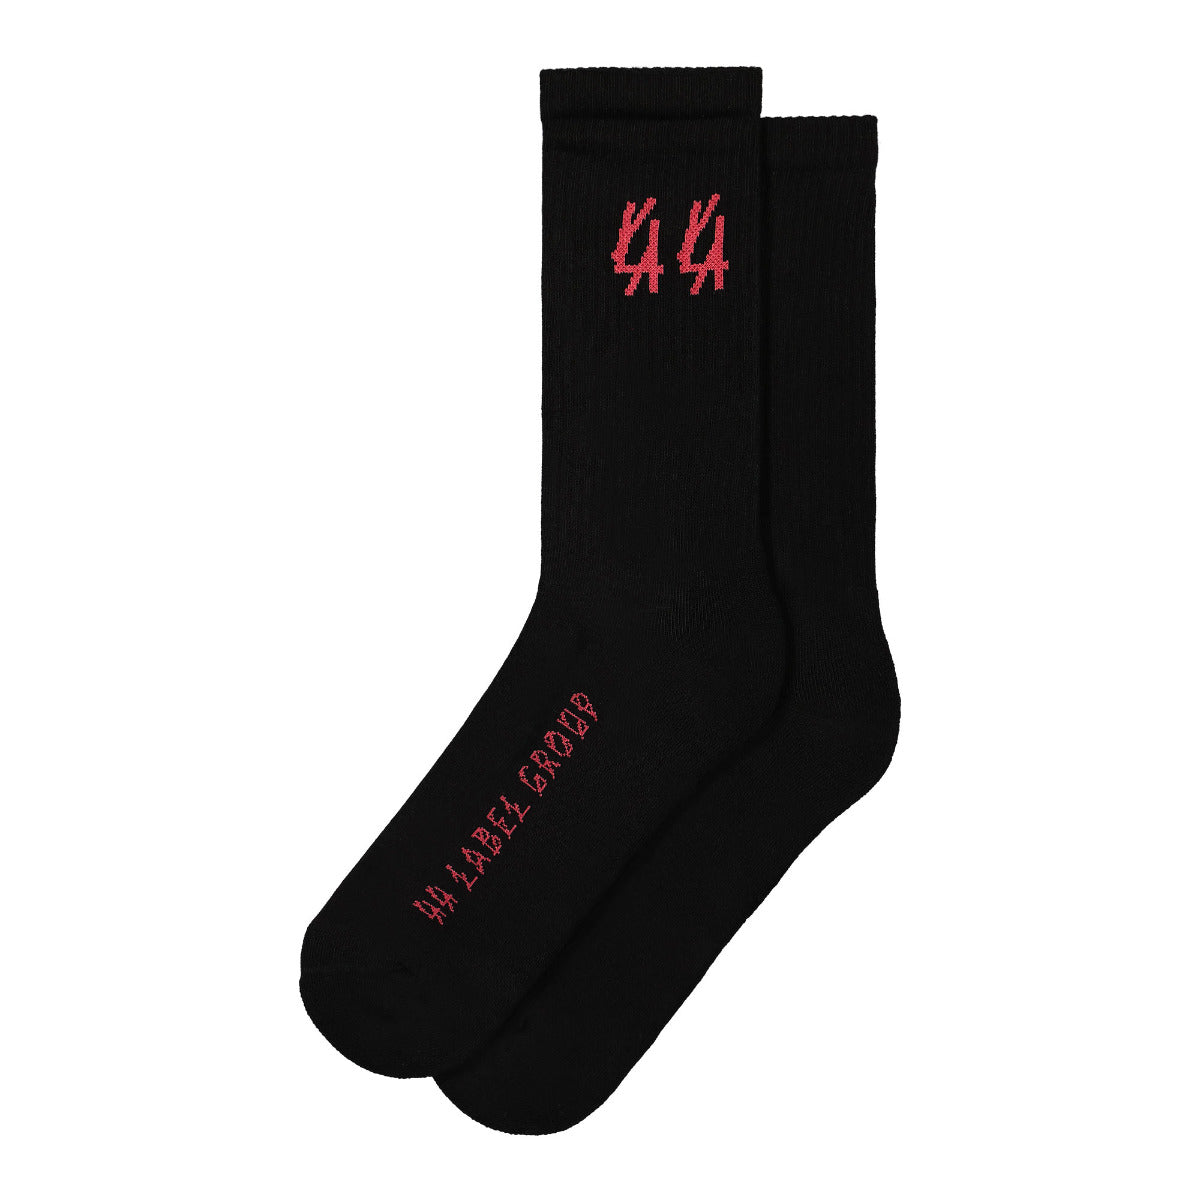 44 Socks